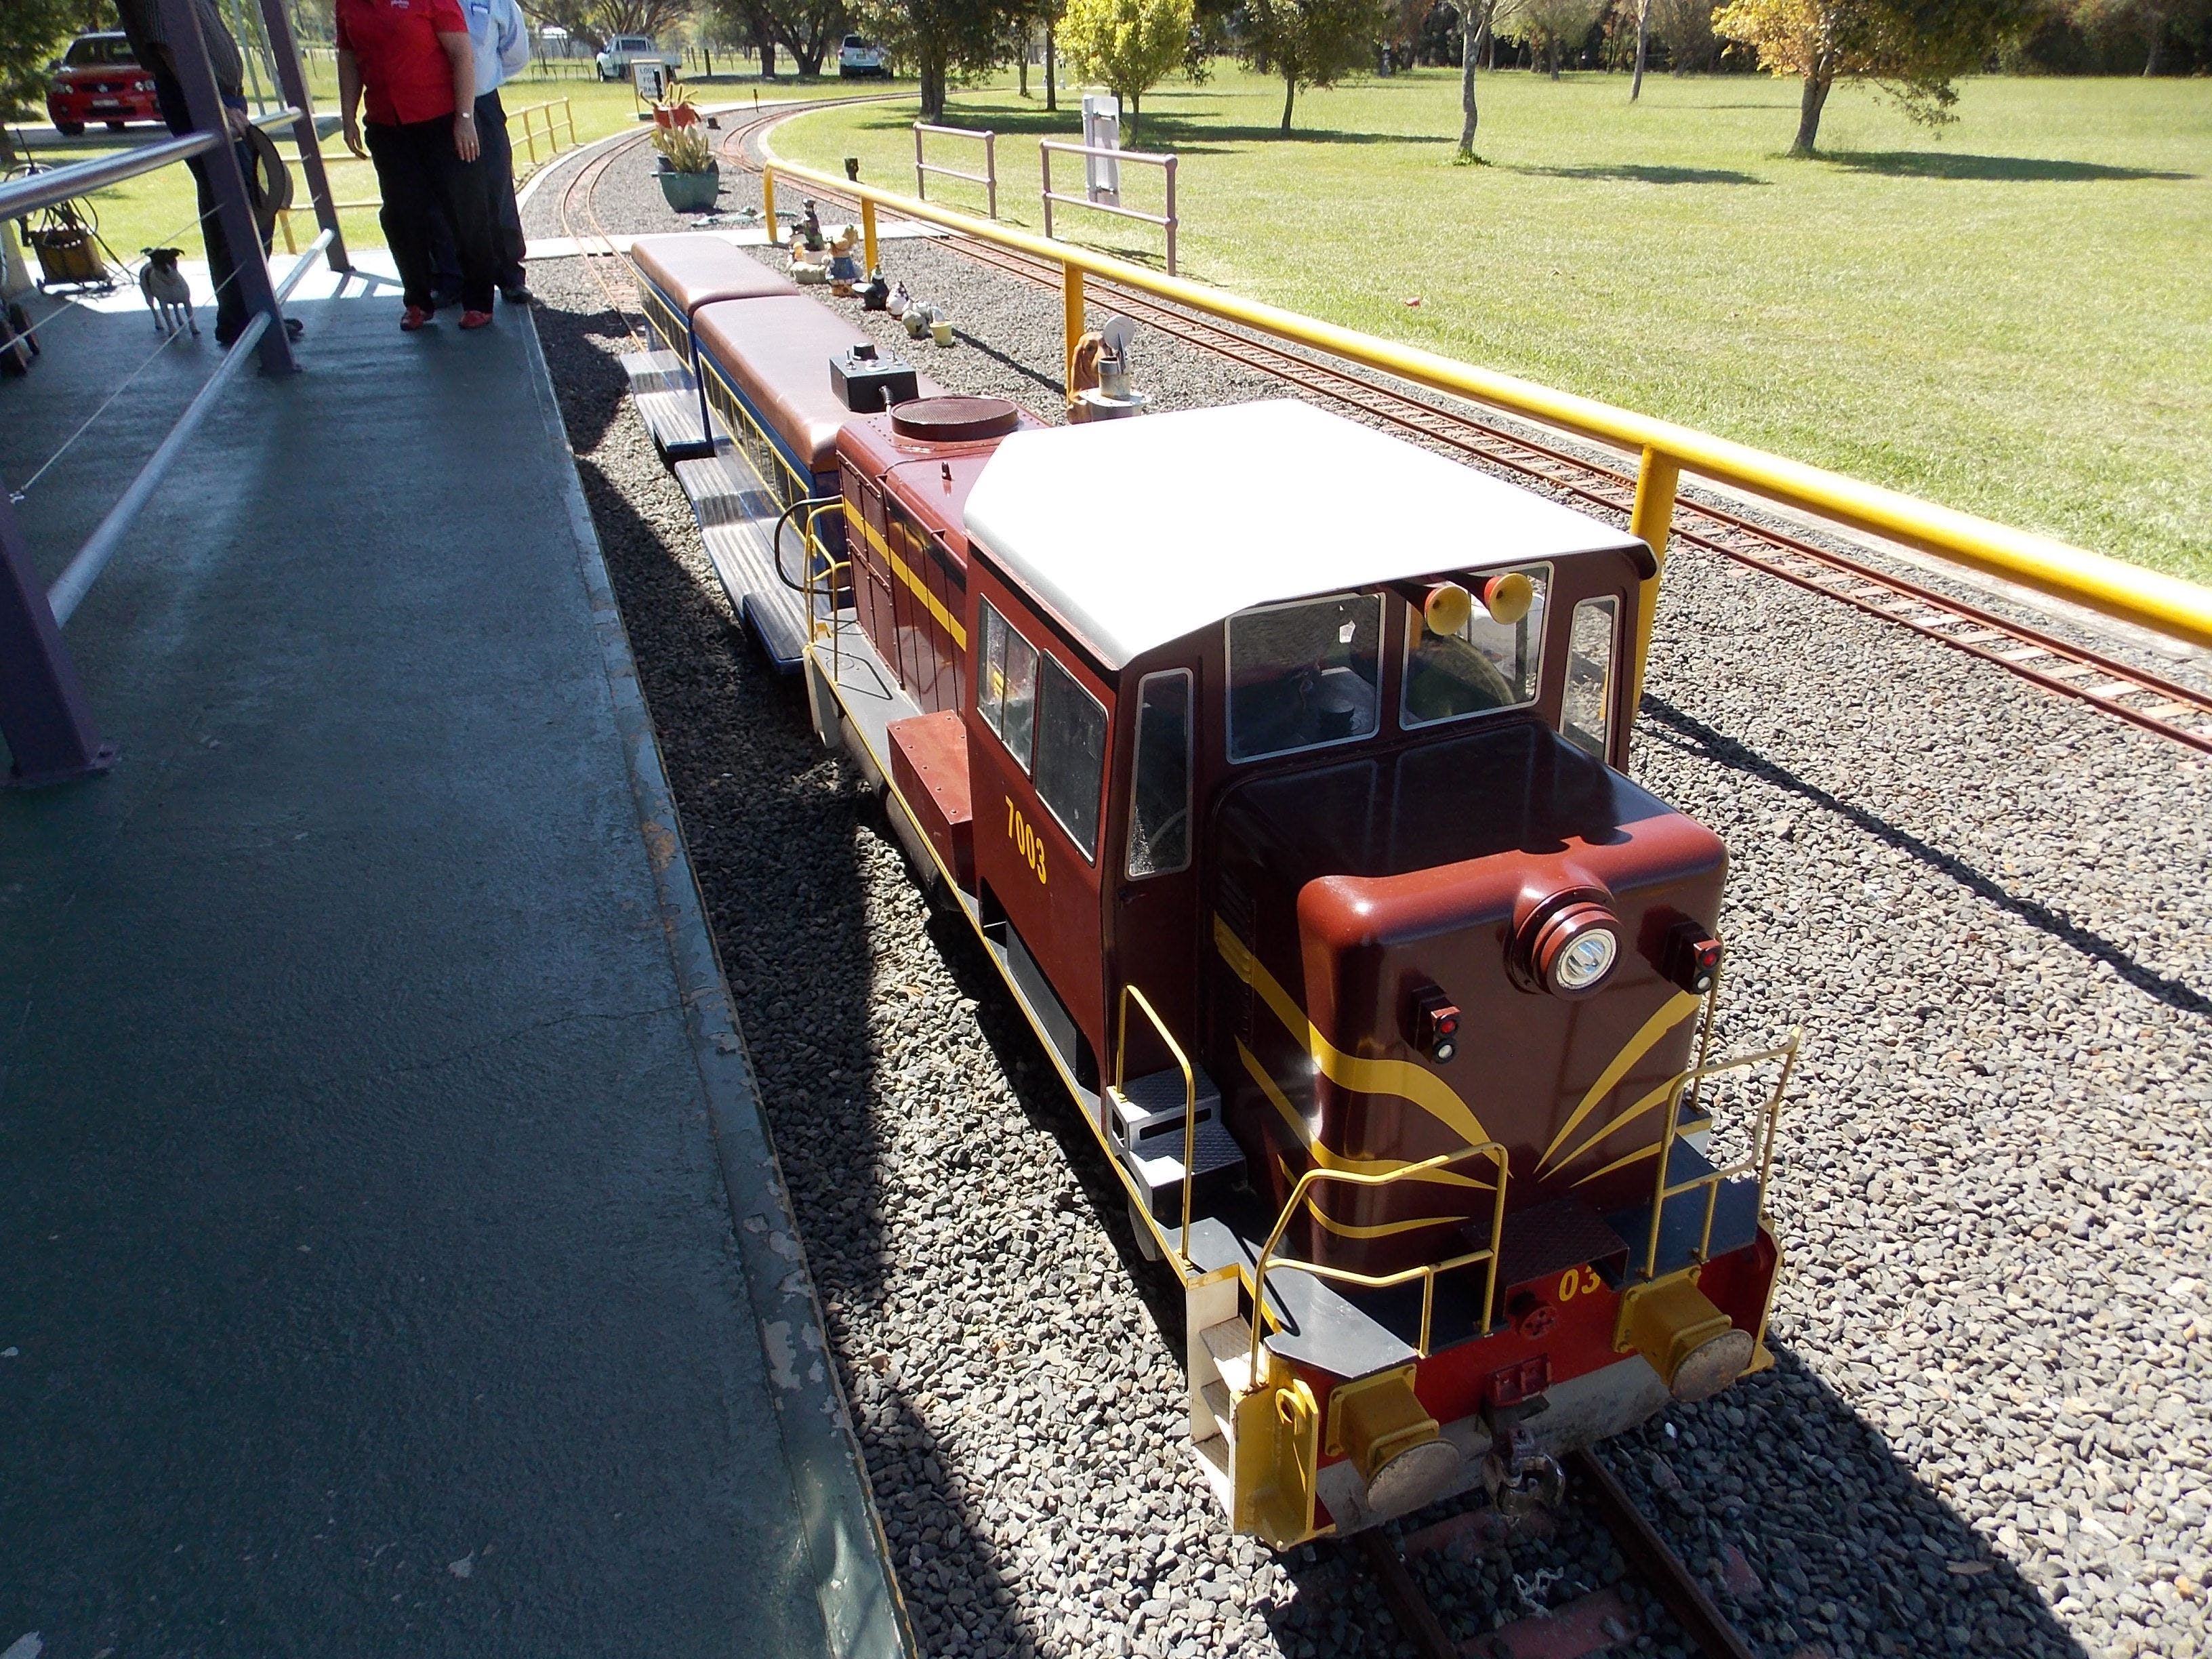 Penwood Miniature Railway - Lightning Ridge Tourism